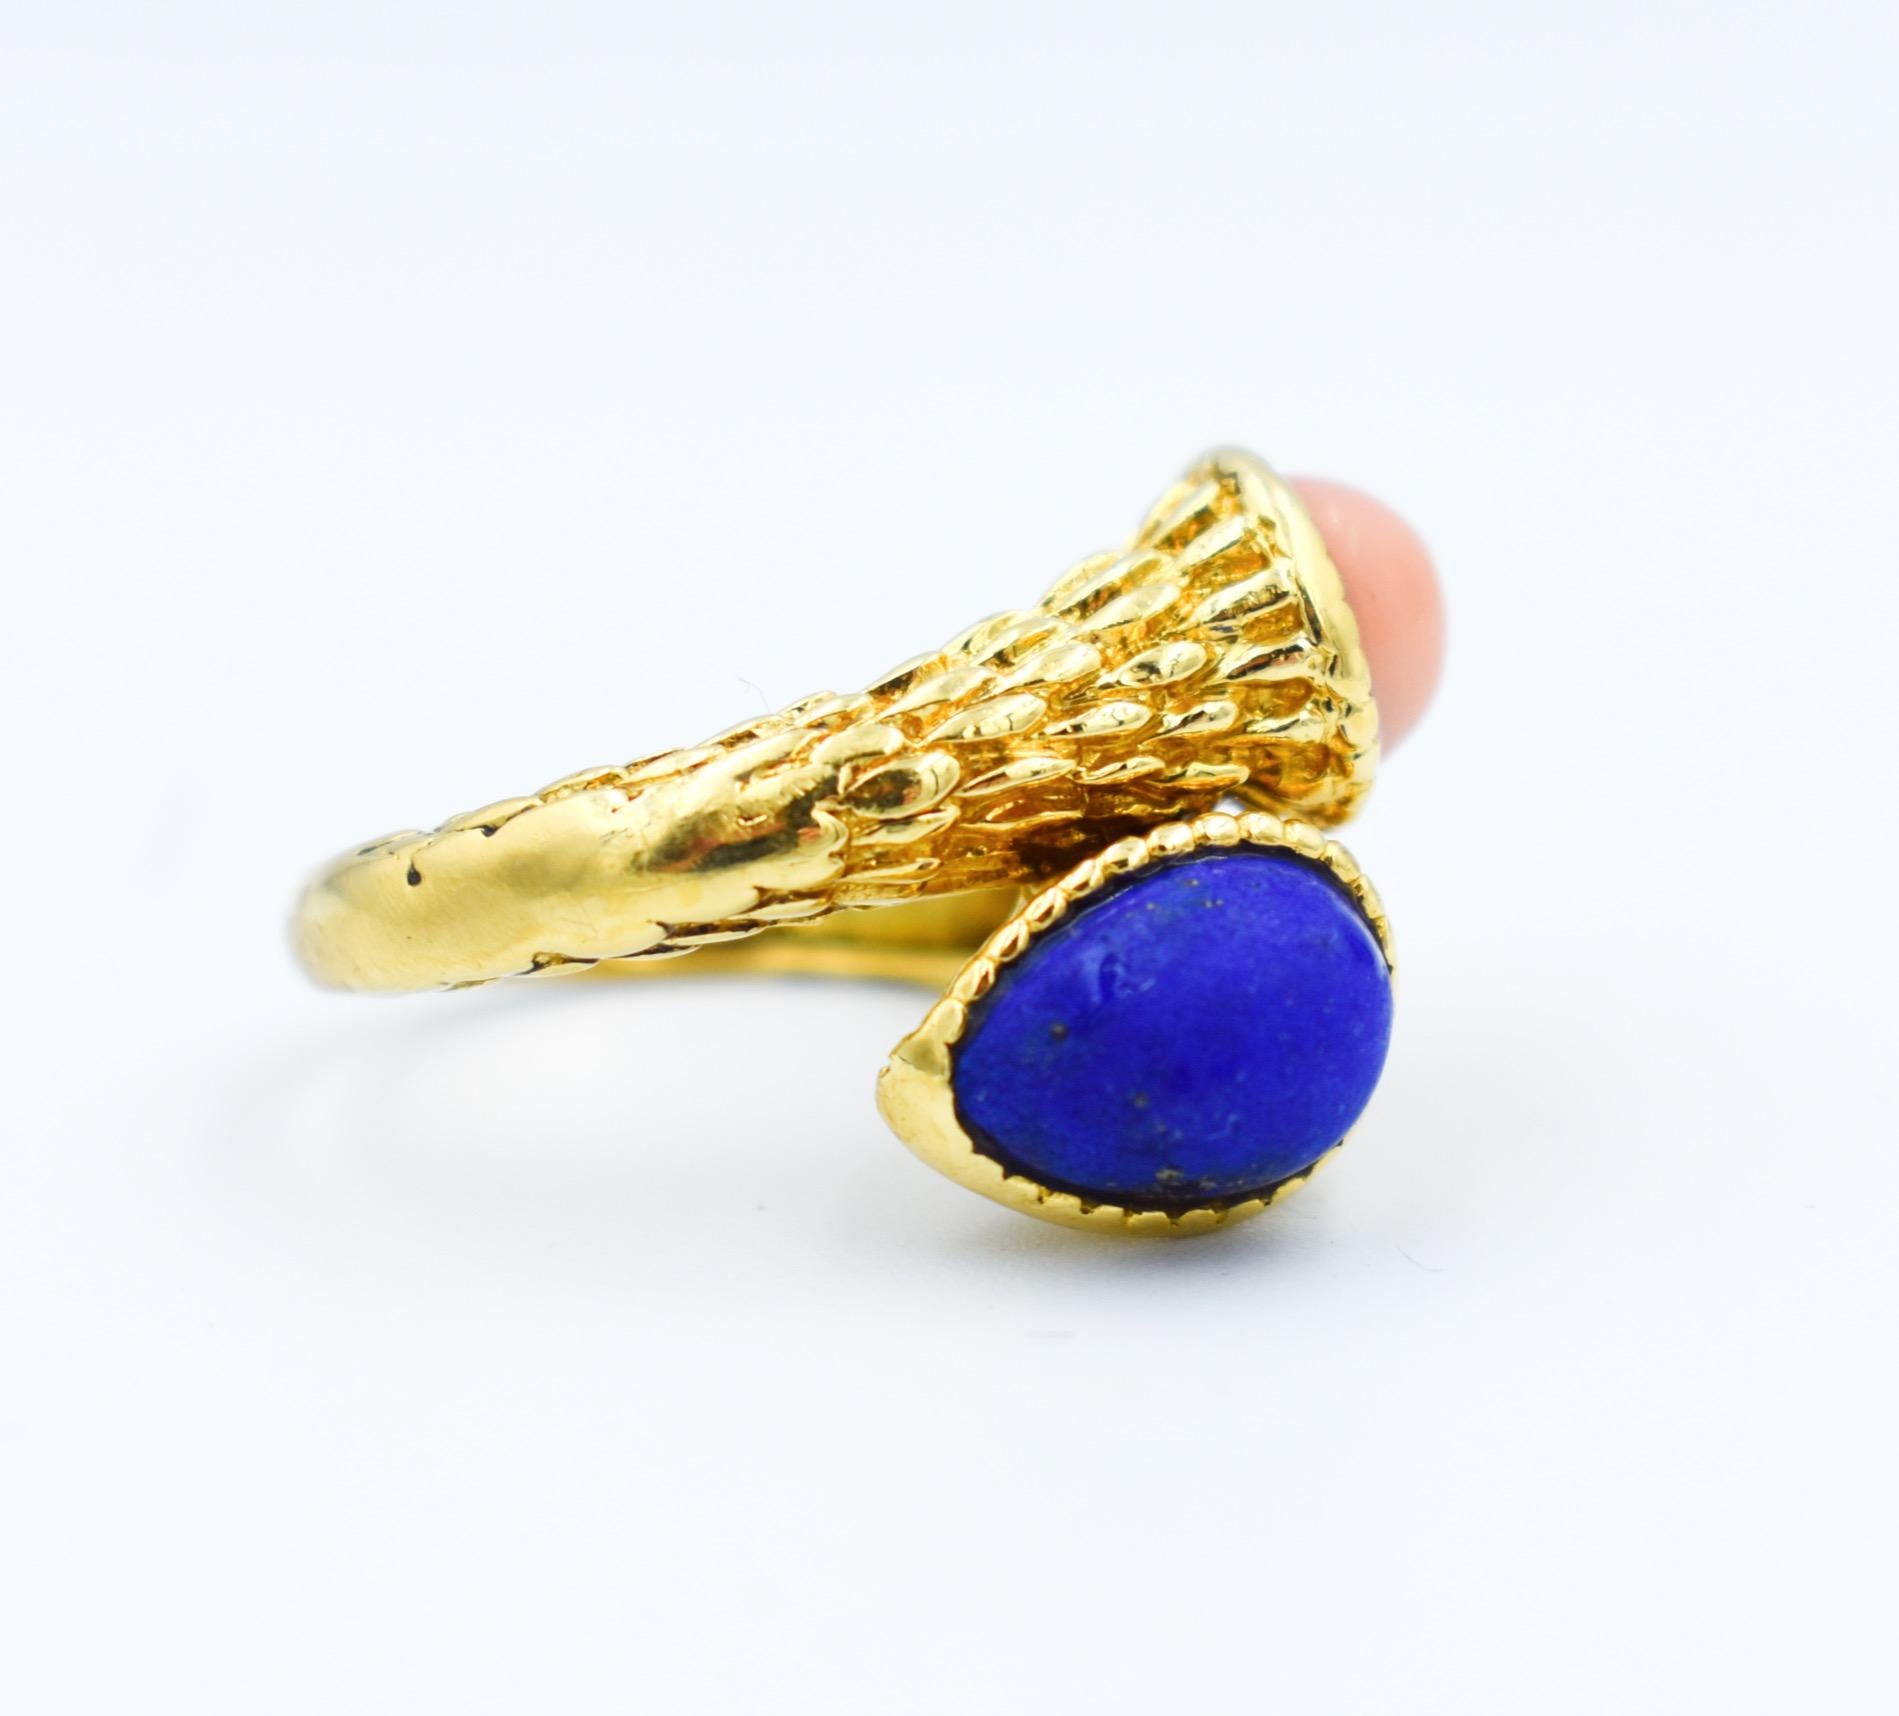 Cabochon Boucheron gold, coral and lapis lazuli bohemian snake ring - Vintage ring